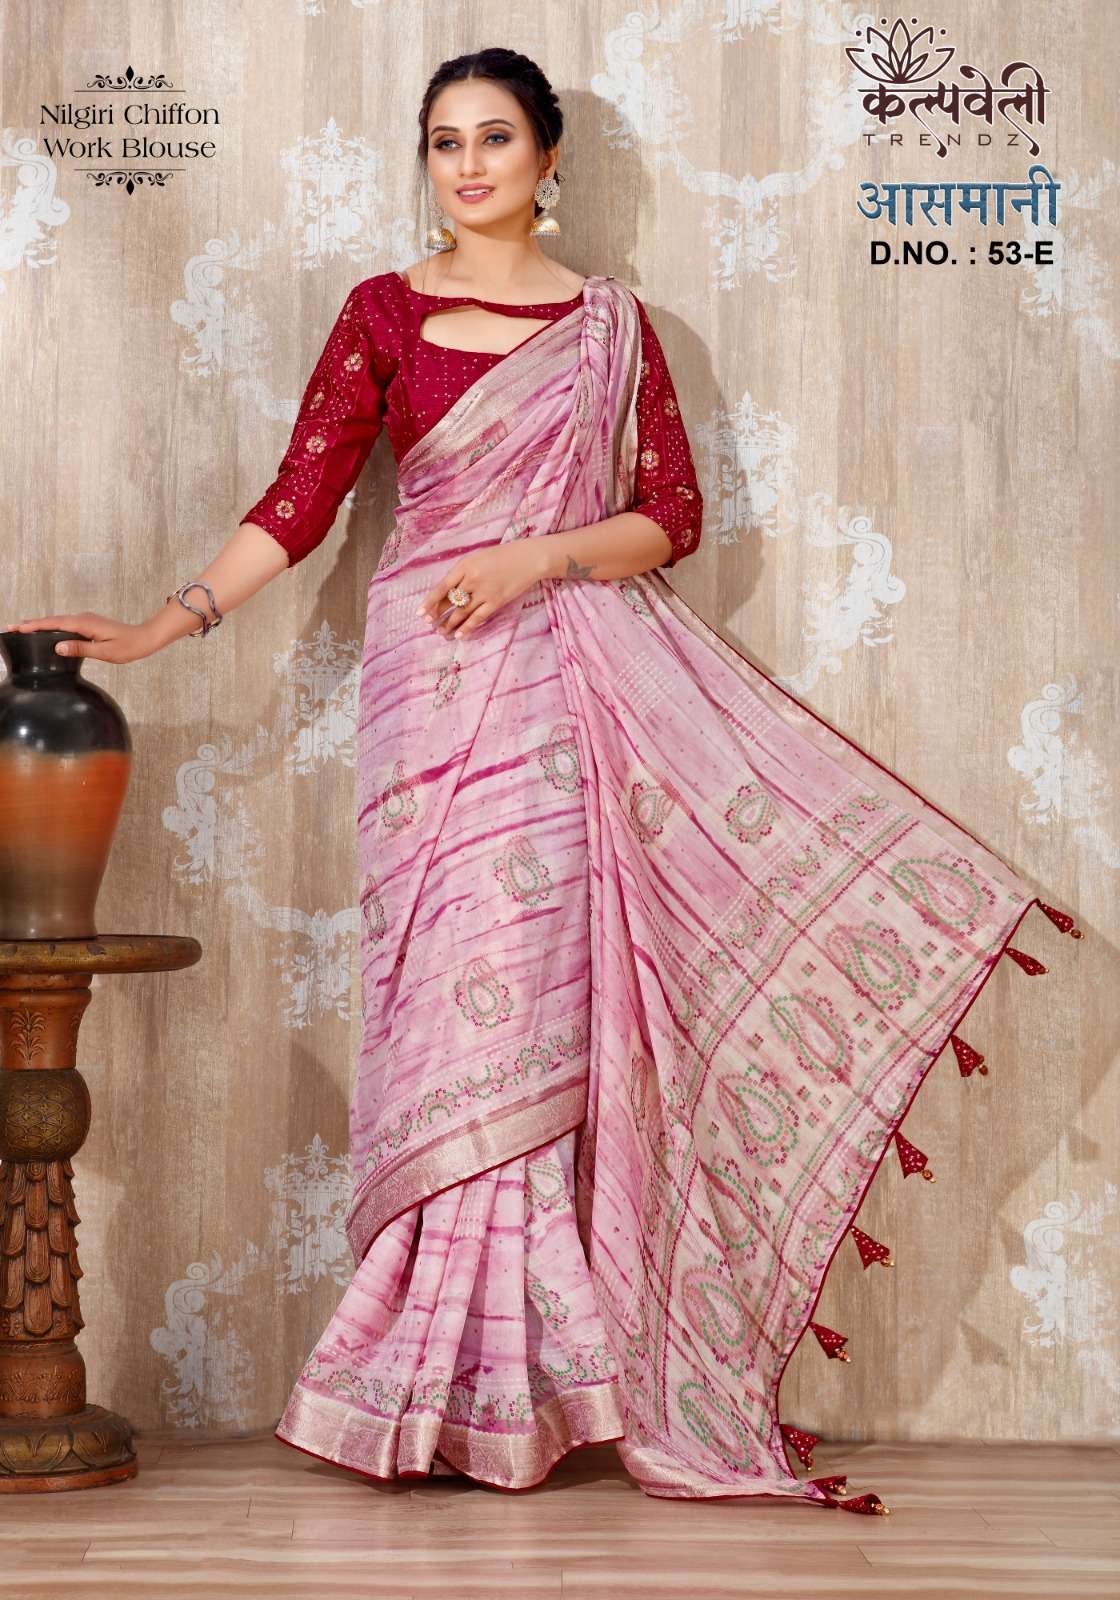 kalpavelly trendz ashmani 53 fancy print designs chiffon sarees